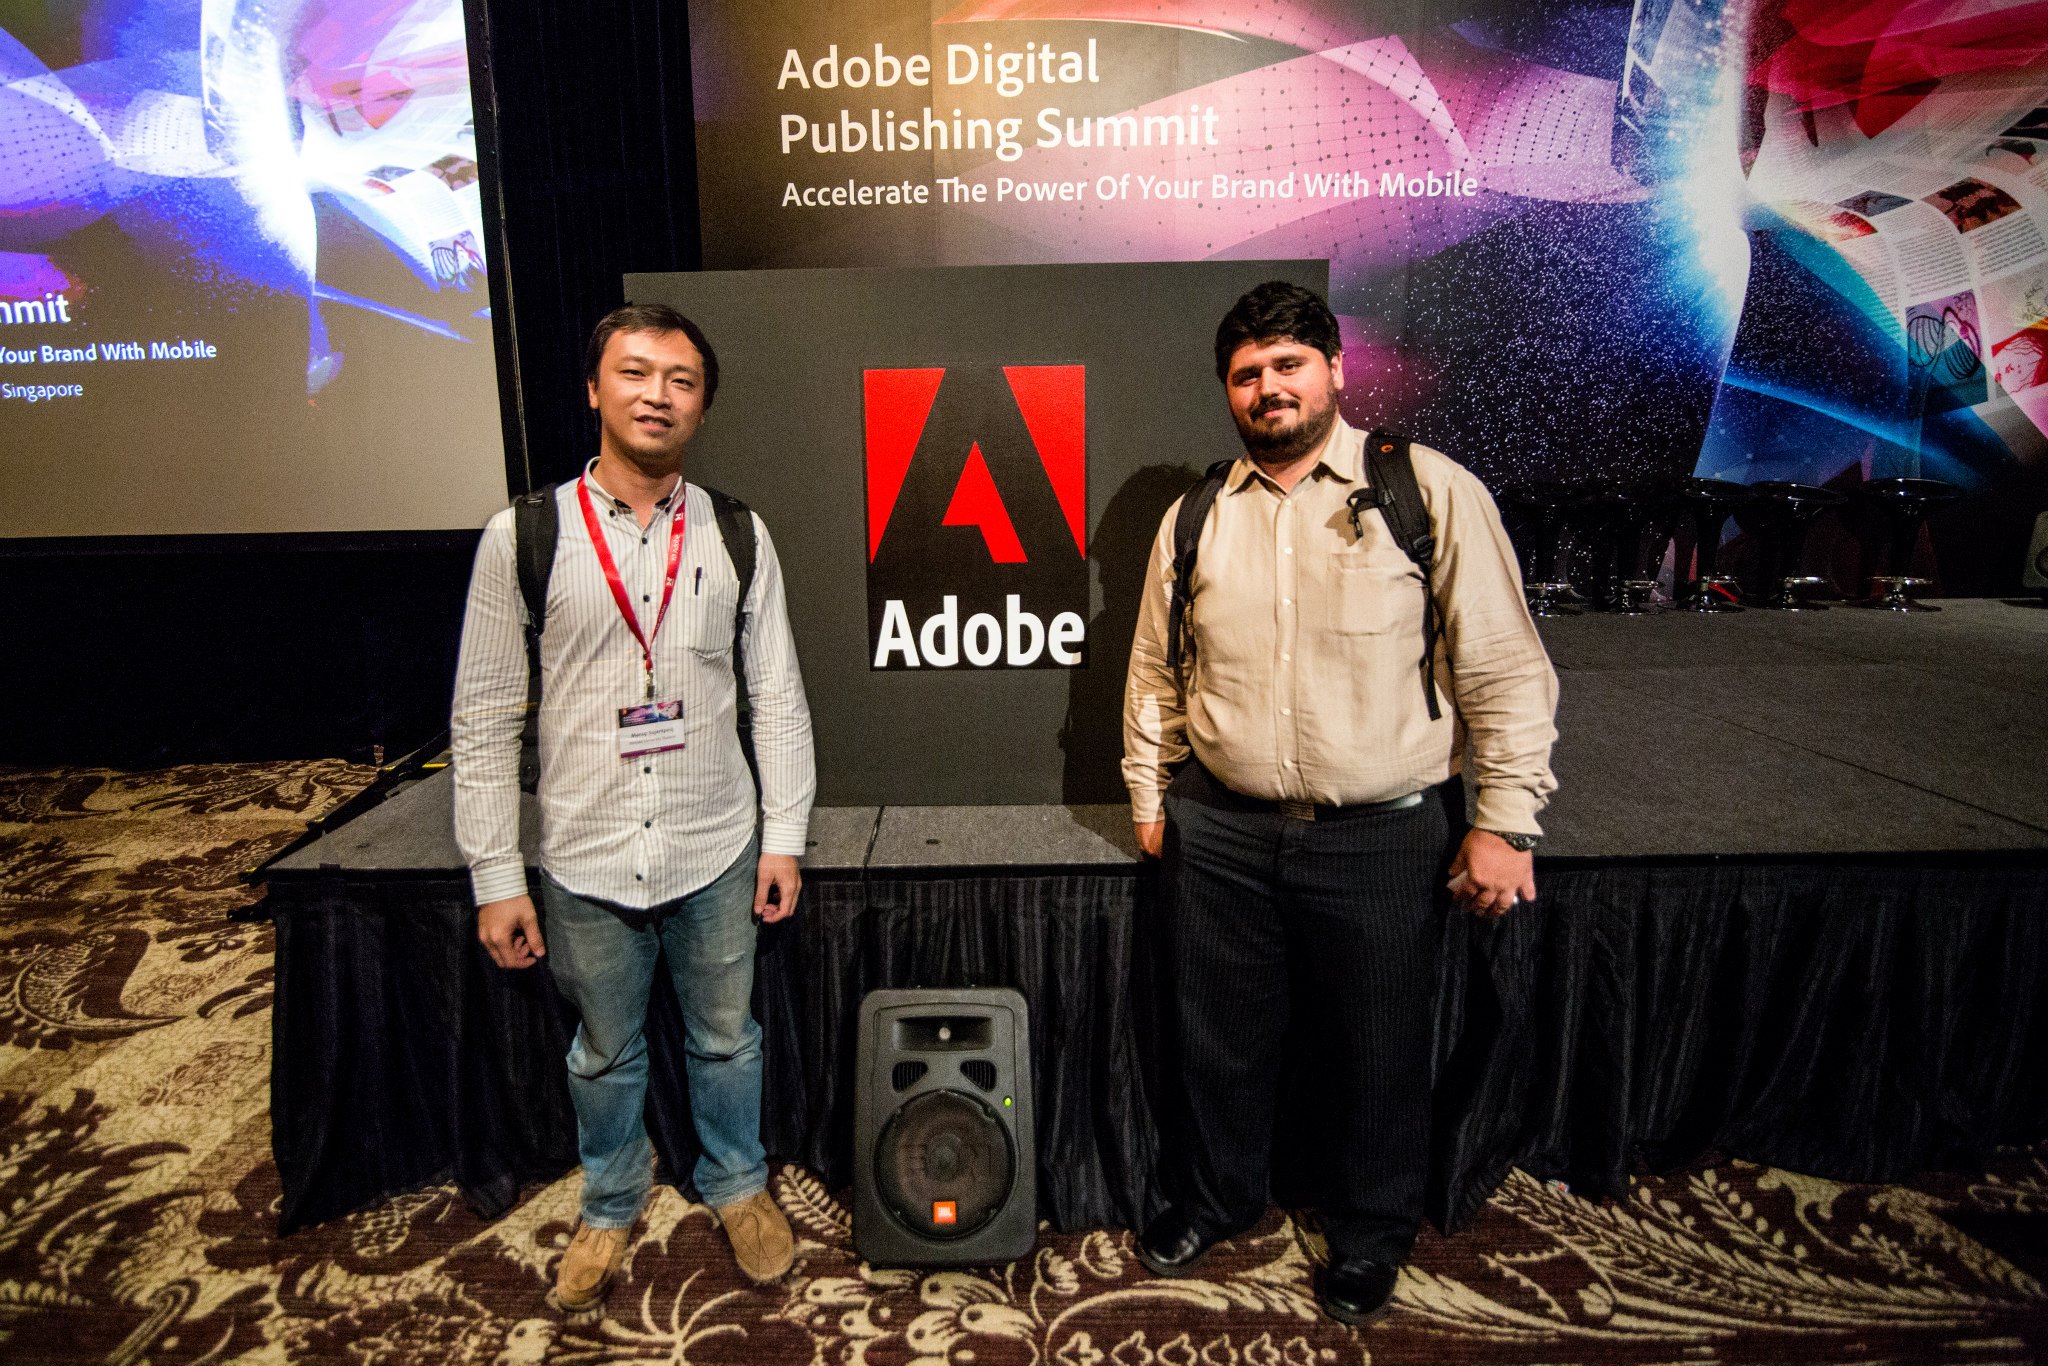 Adobe_DPS_Singapore-6.jpg